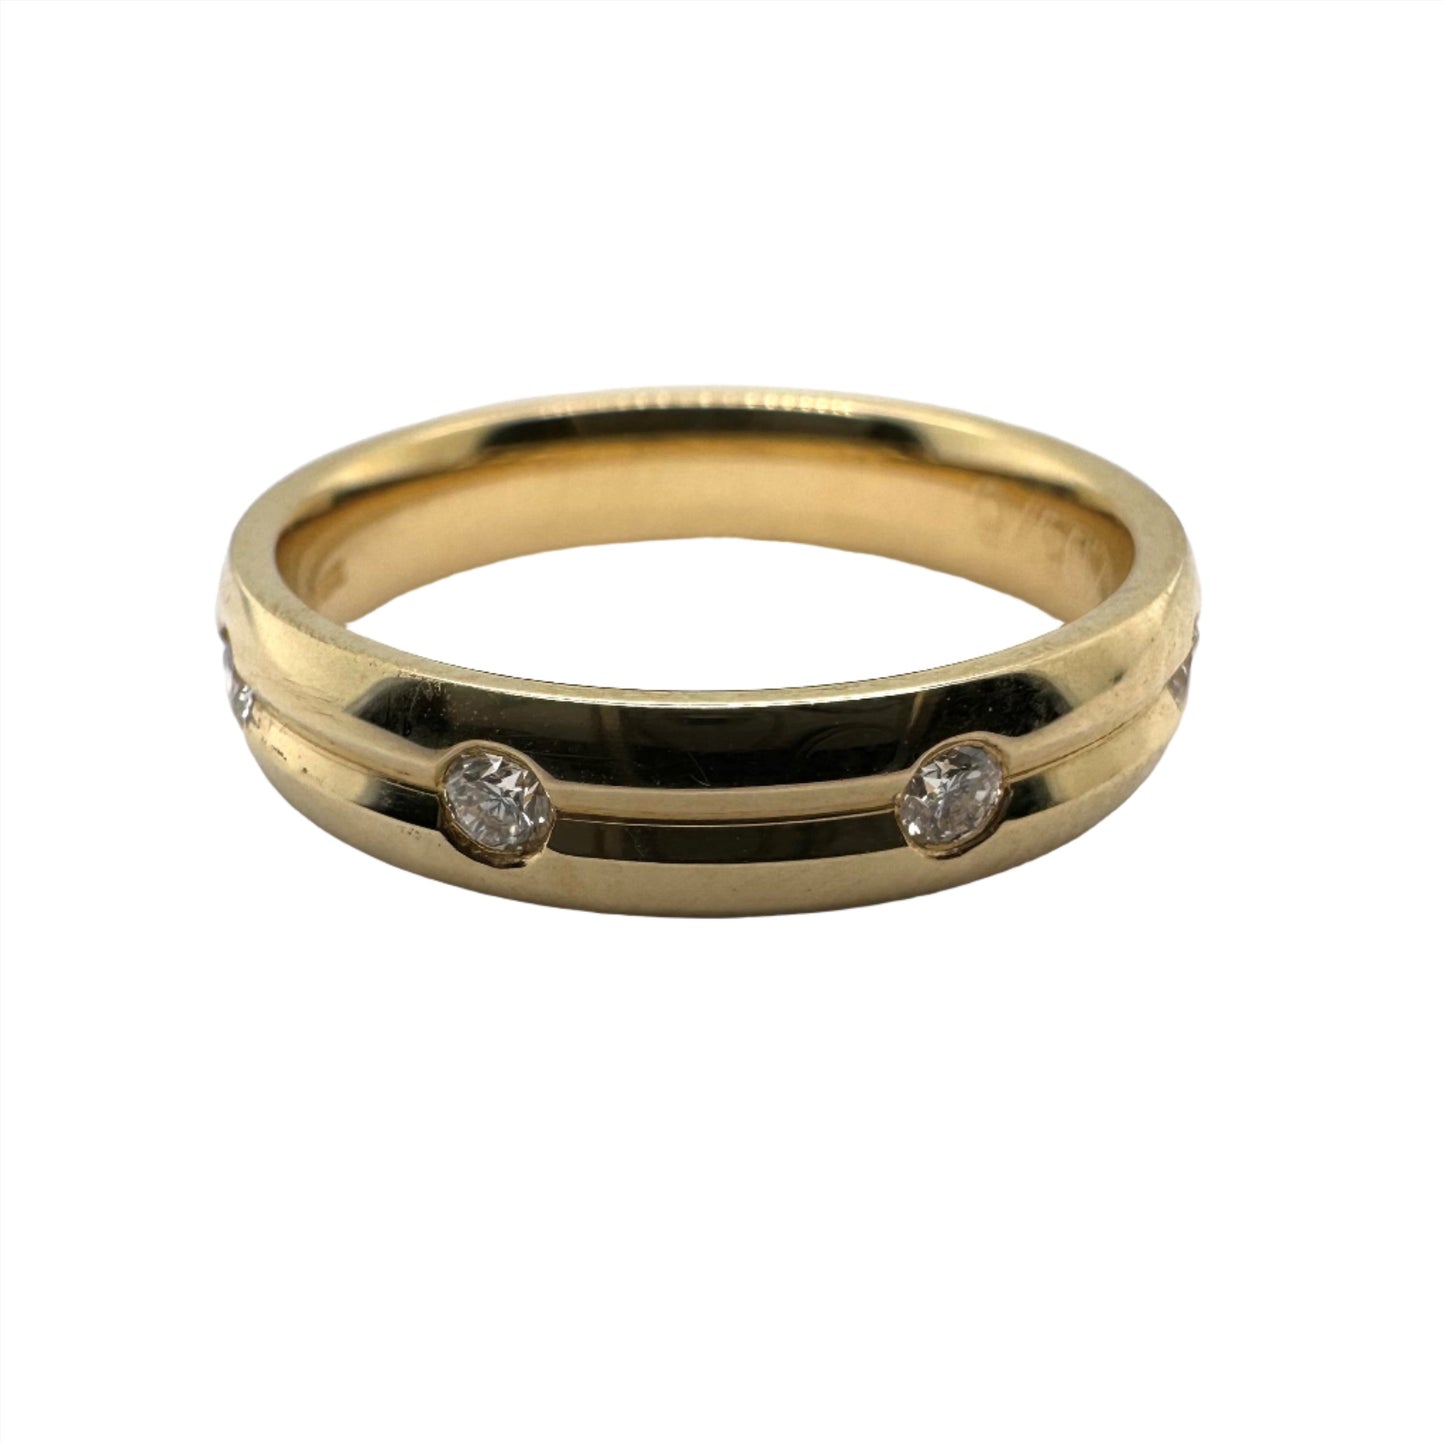 Elegant 18ct gold wedding ring with diamonds